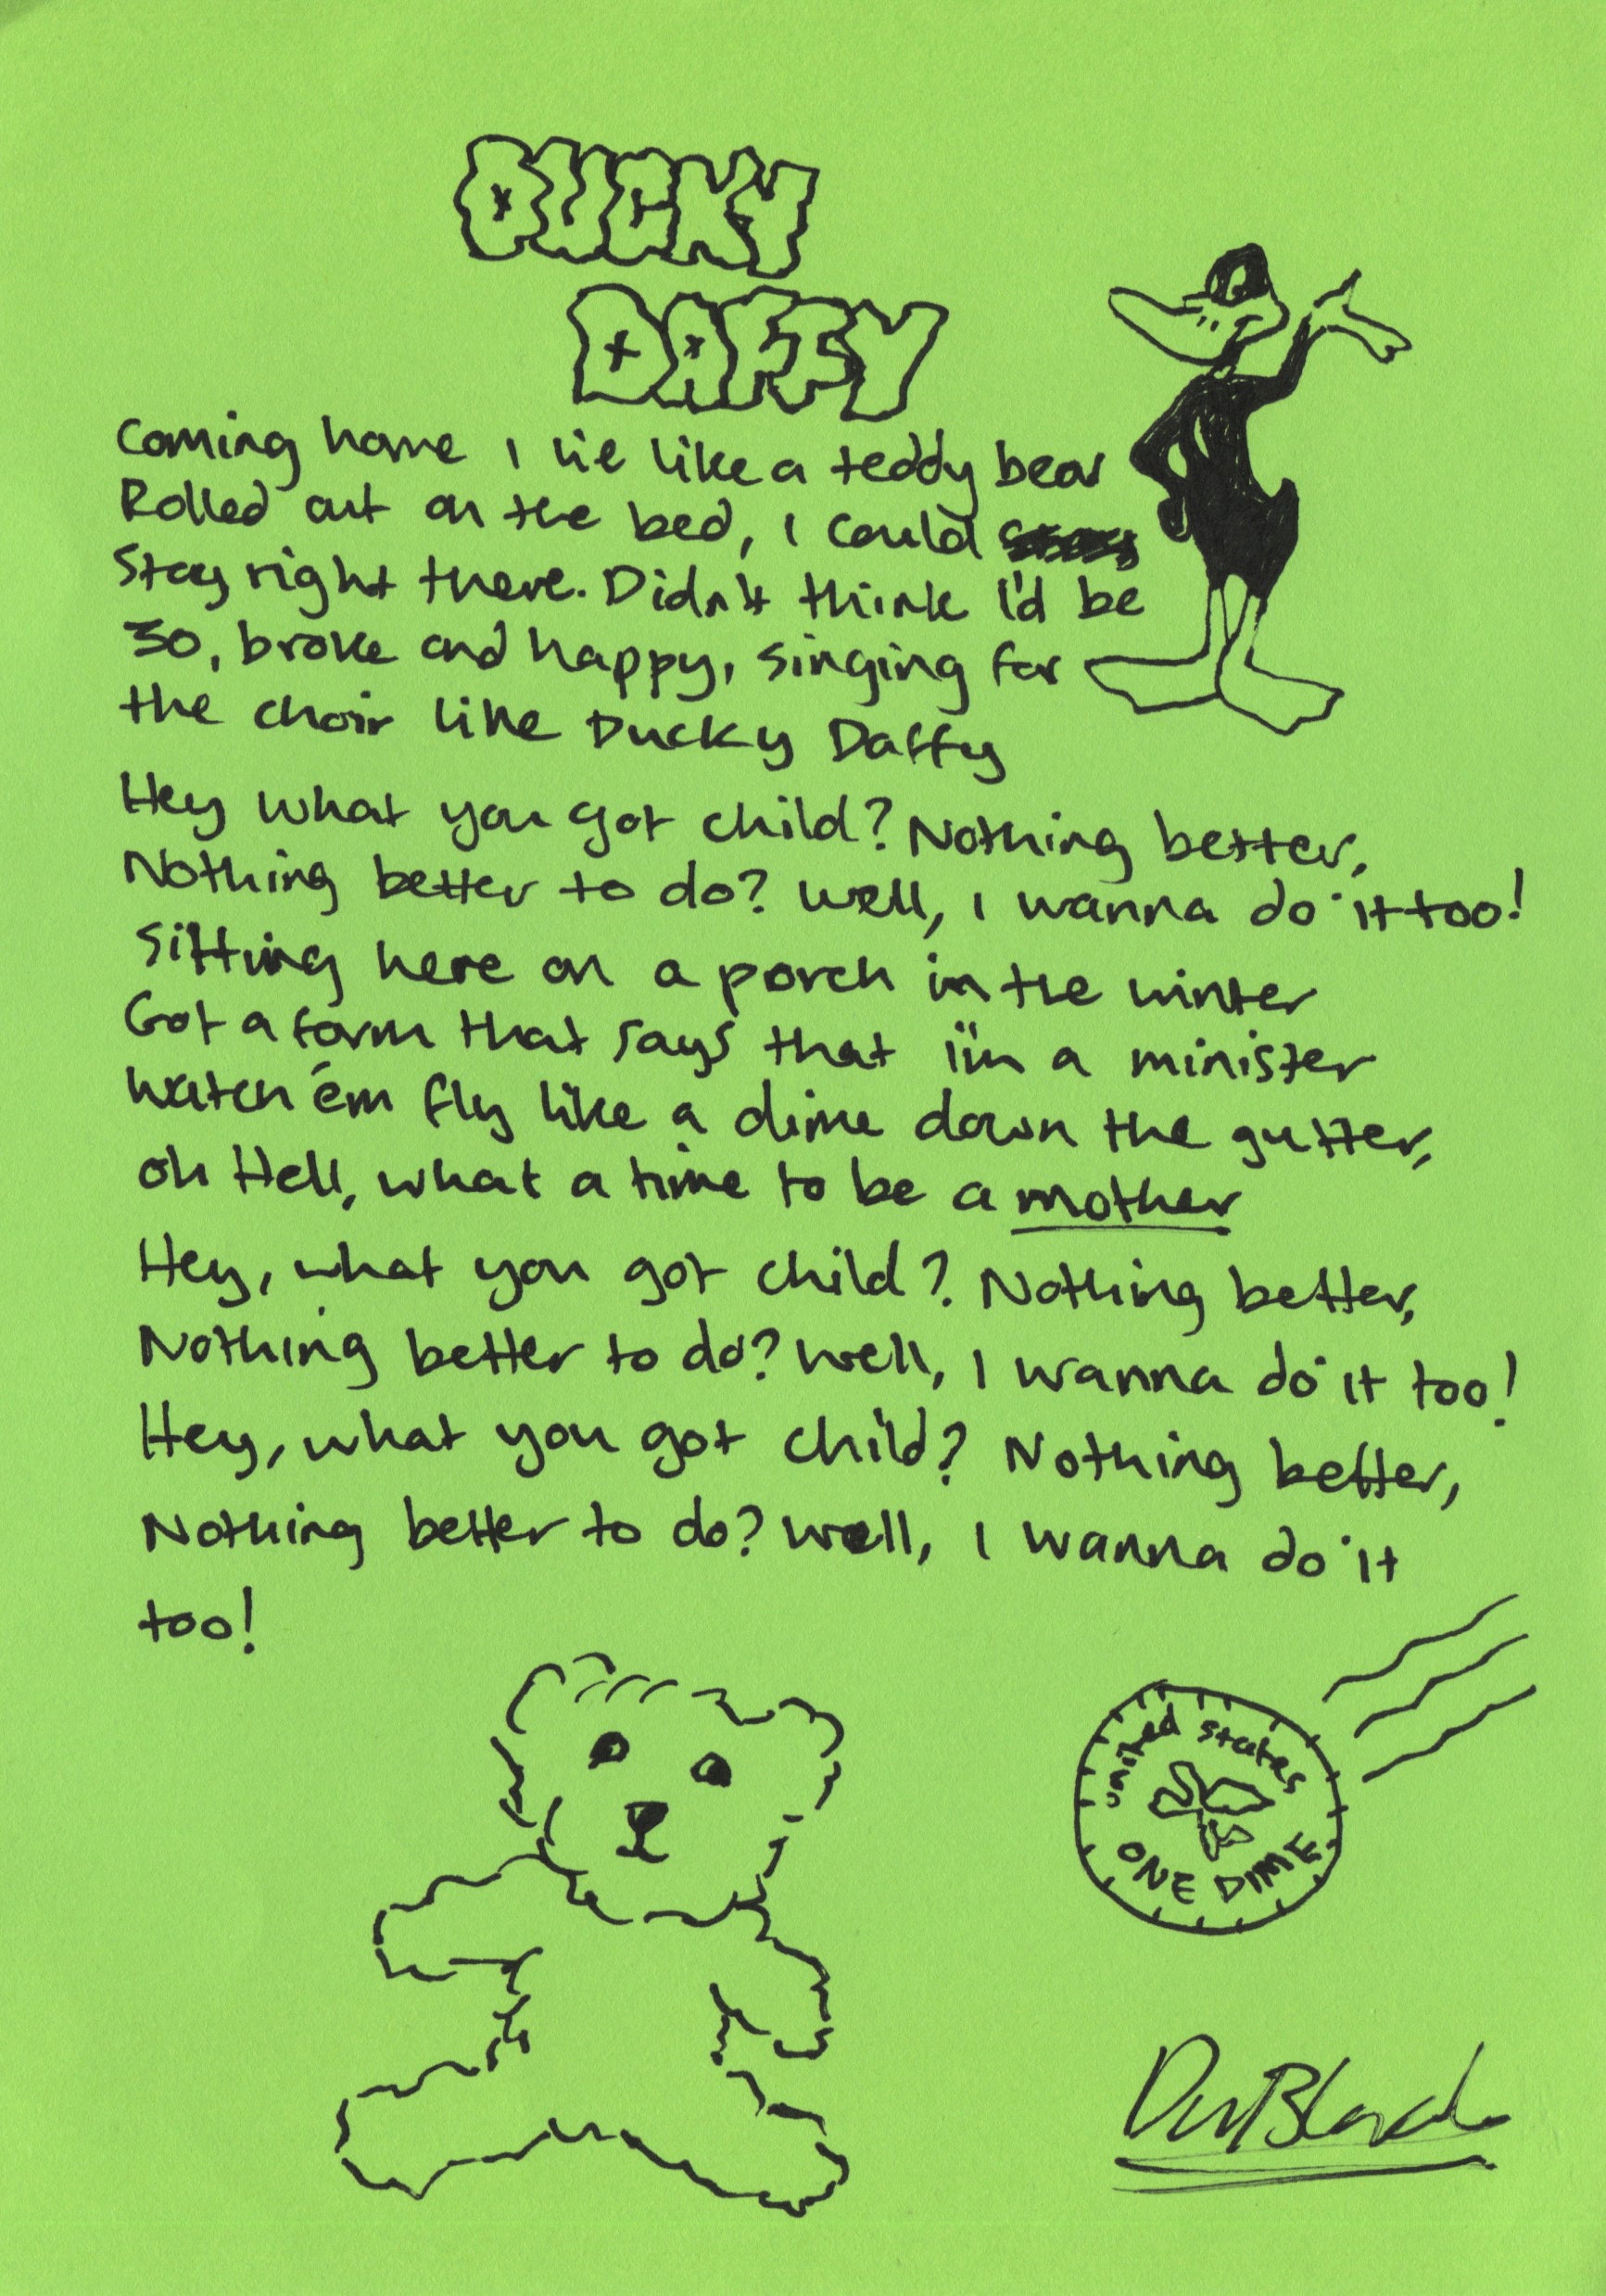 ‘Ducky Daffy' - Hand written lyrics